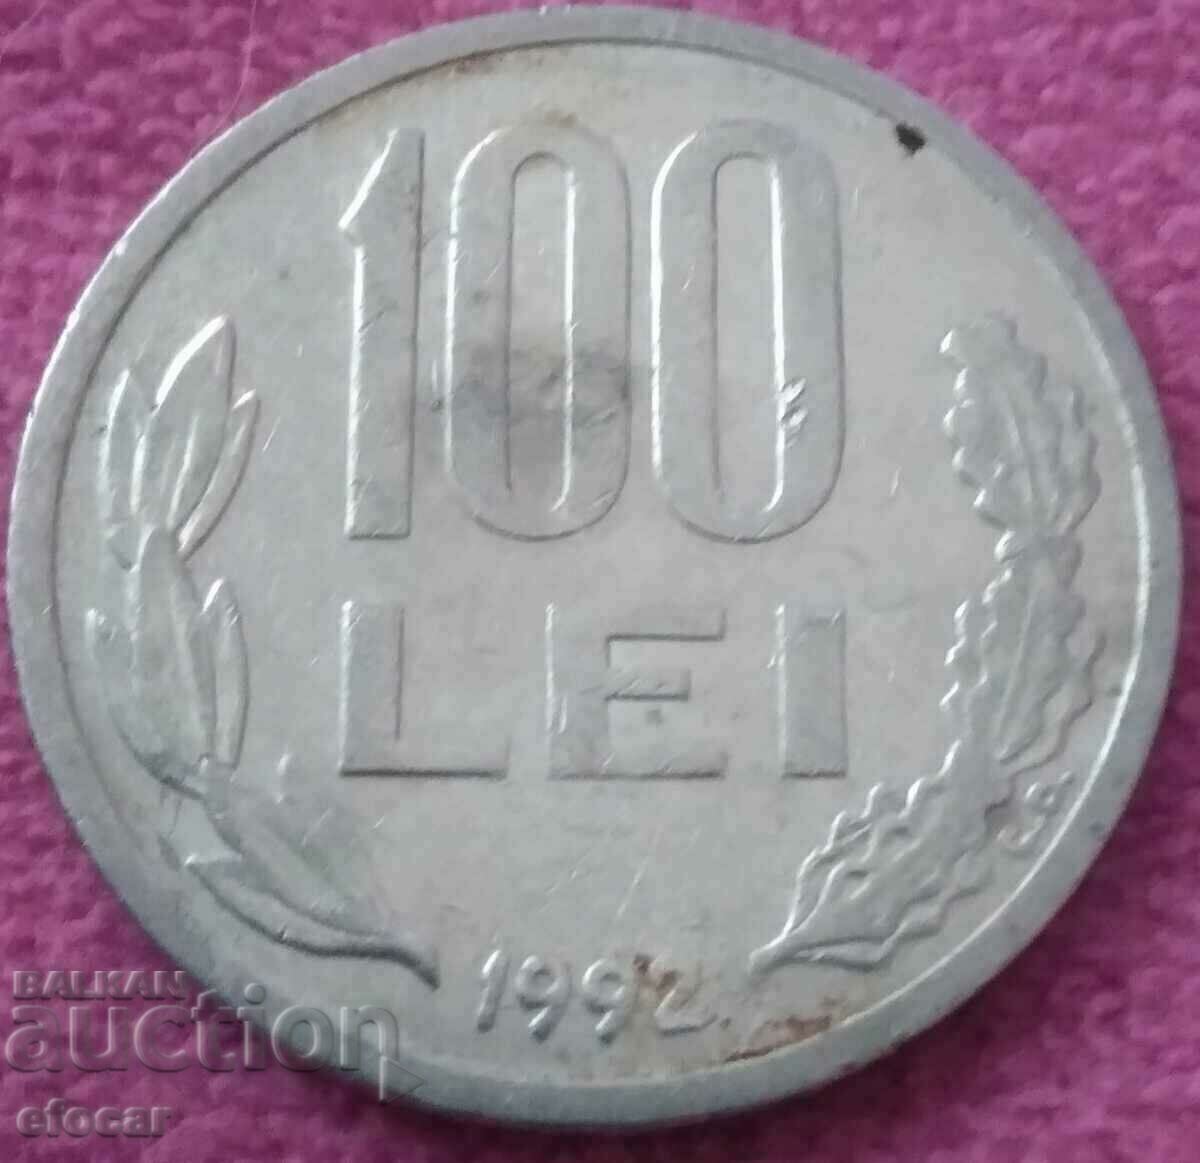 100 lei Romania 1992